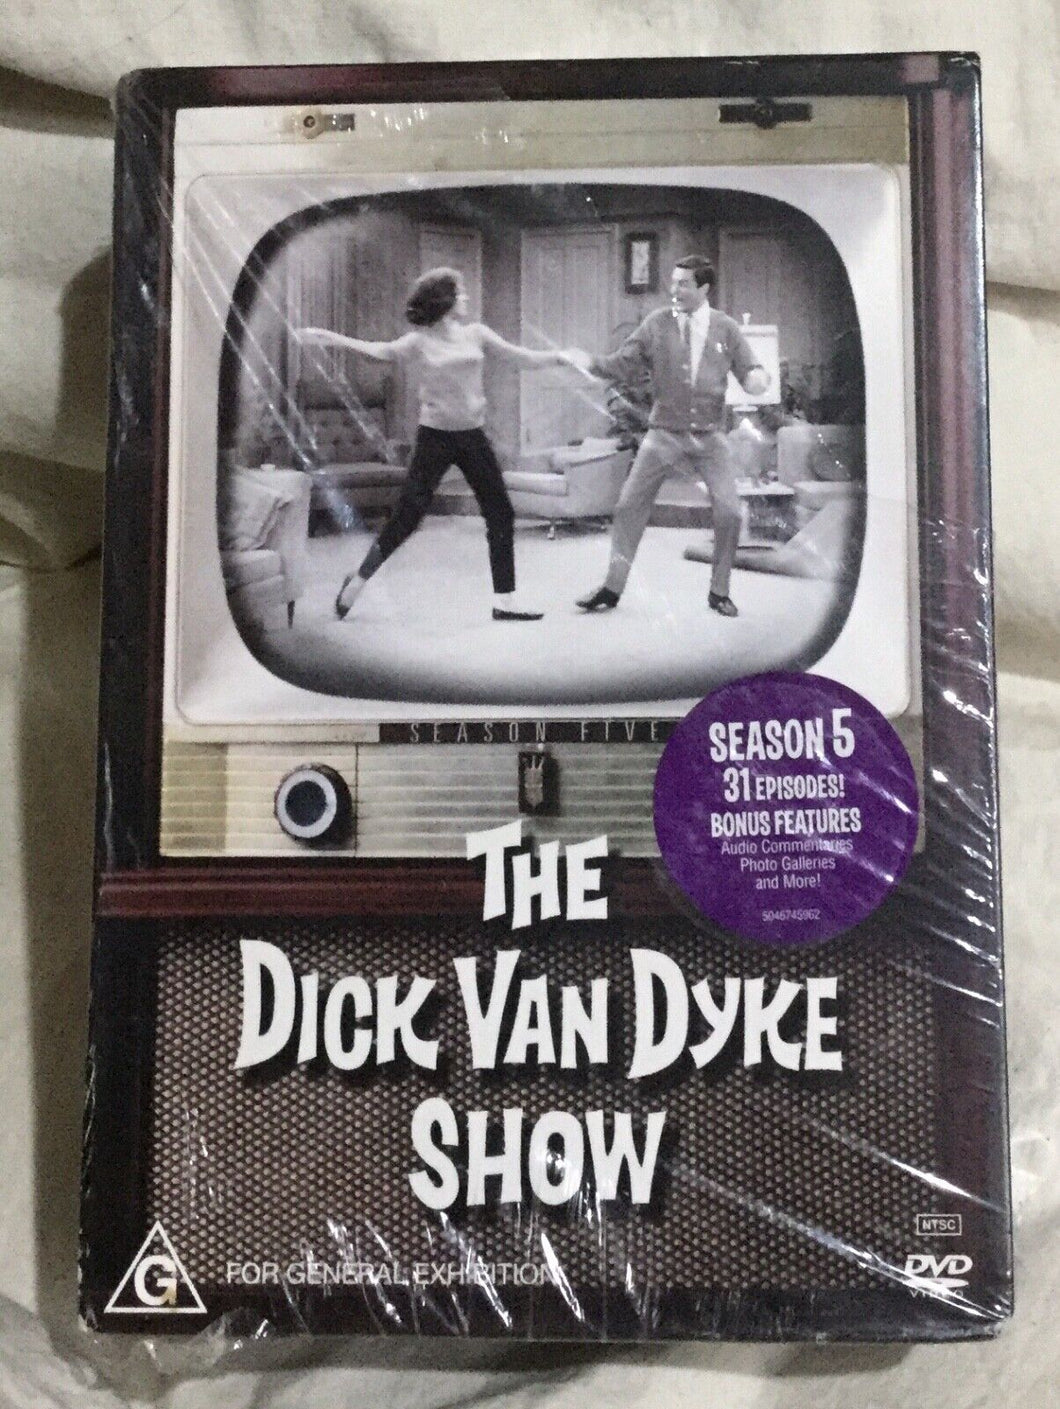 THE DICK VAN DYKE SHOW - SEASON 5 - DVD